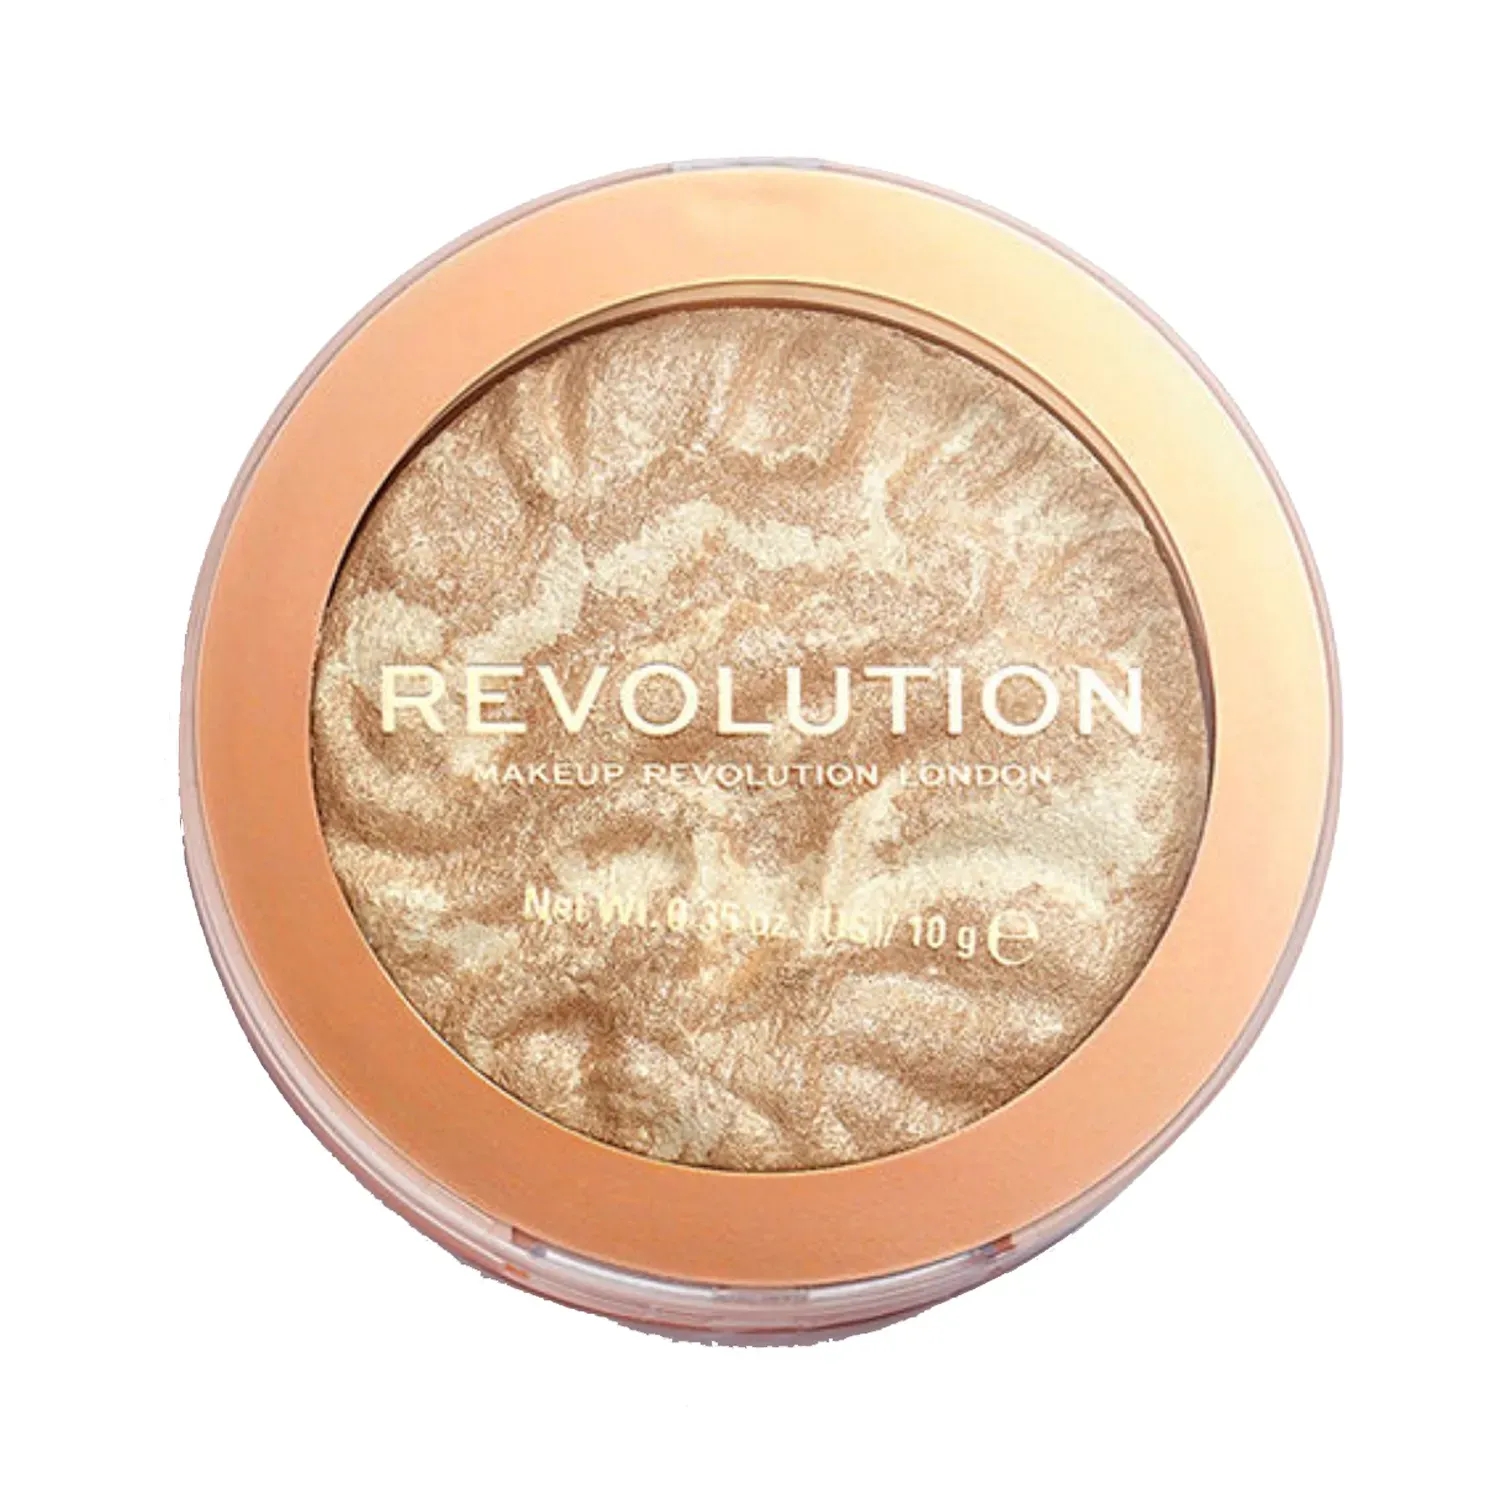 Makeup Revolution | Makeup Revolution Highlight Reloaded - Raise To Bar (10g)